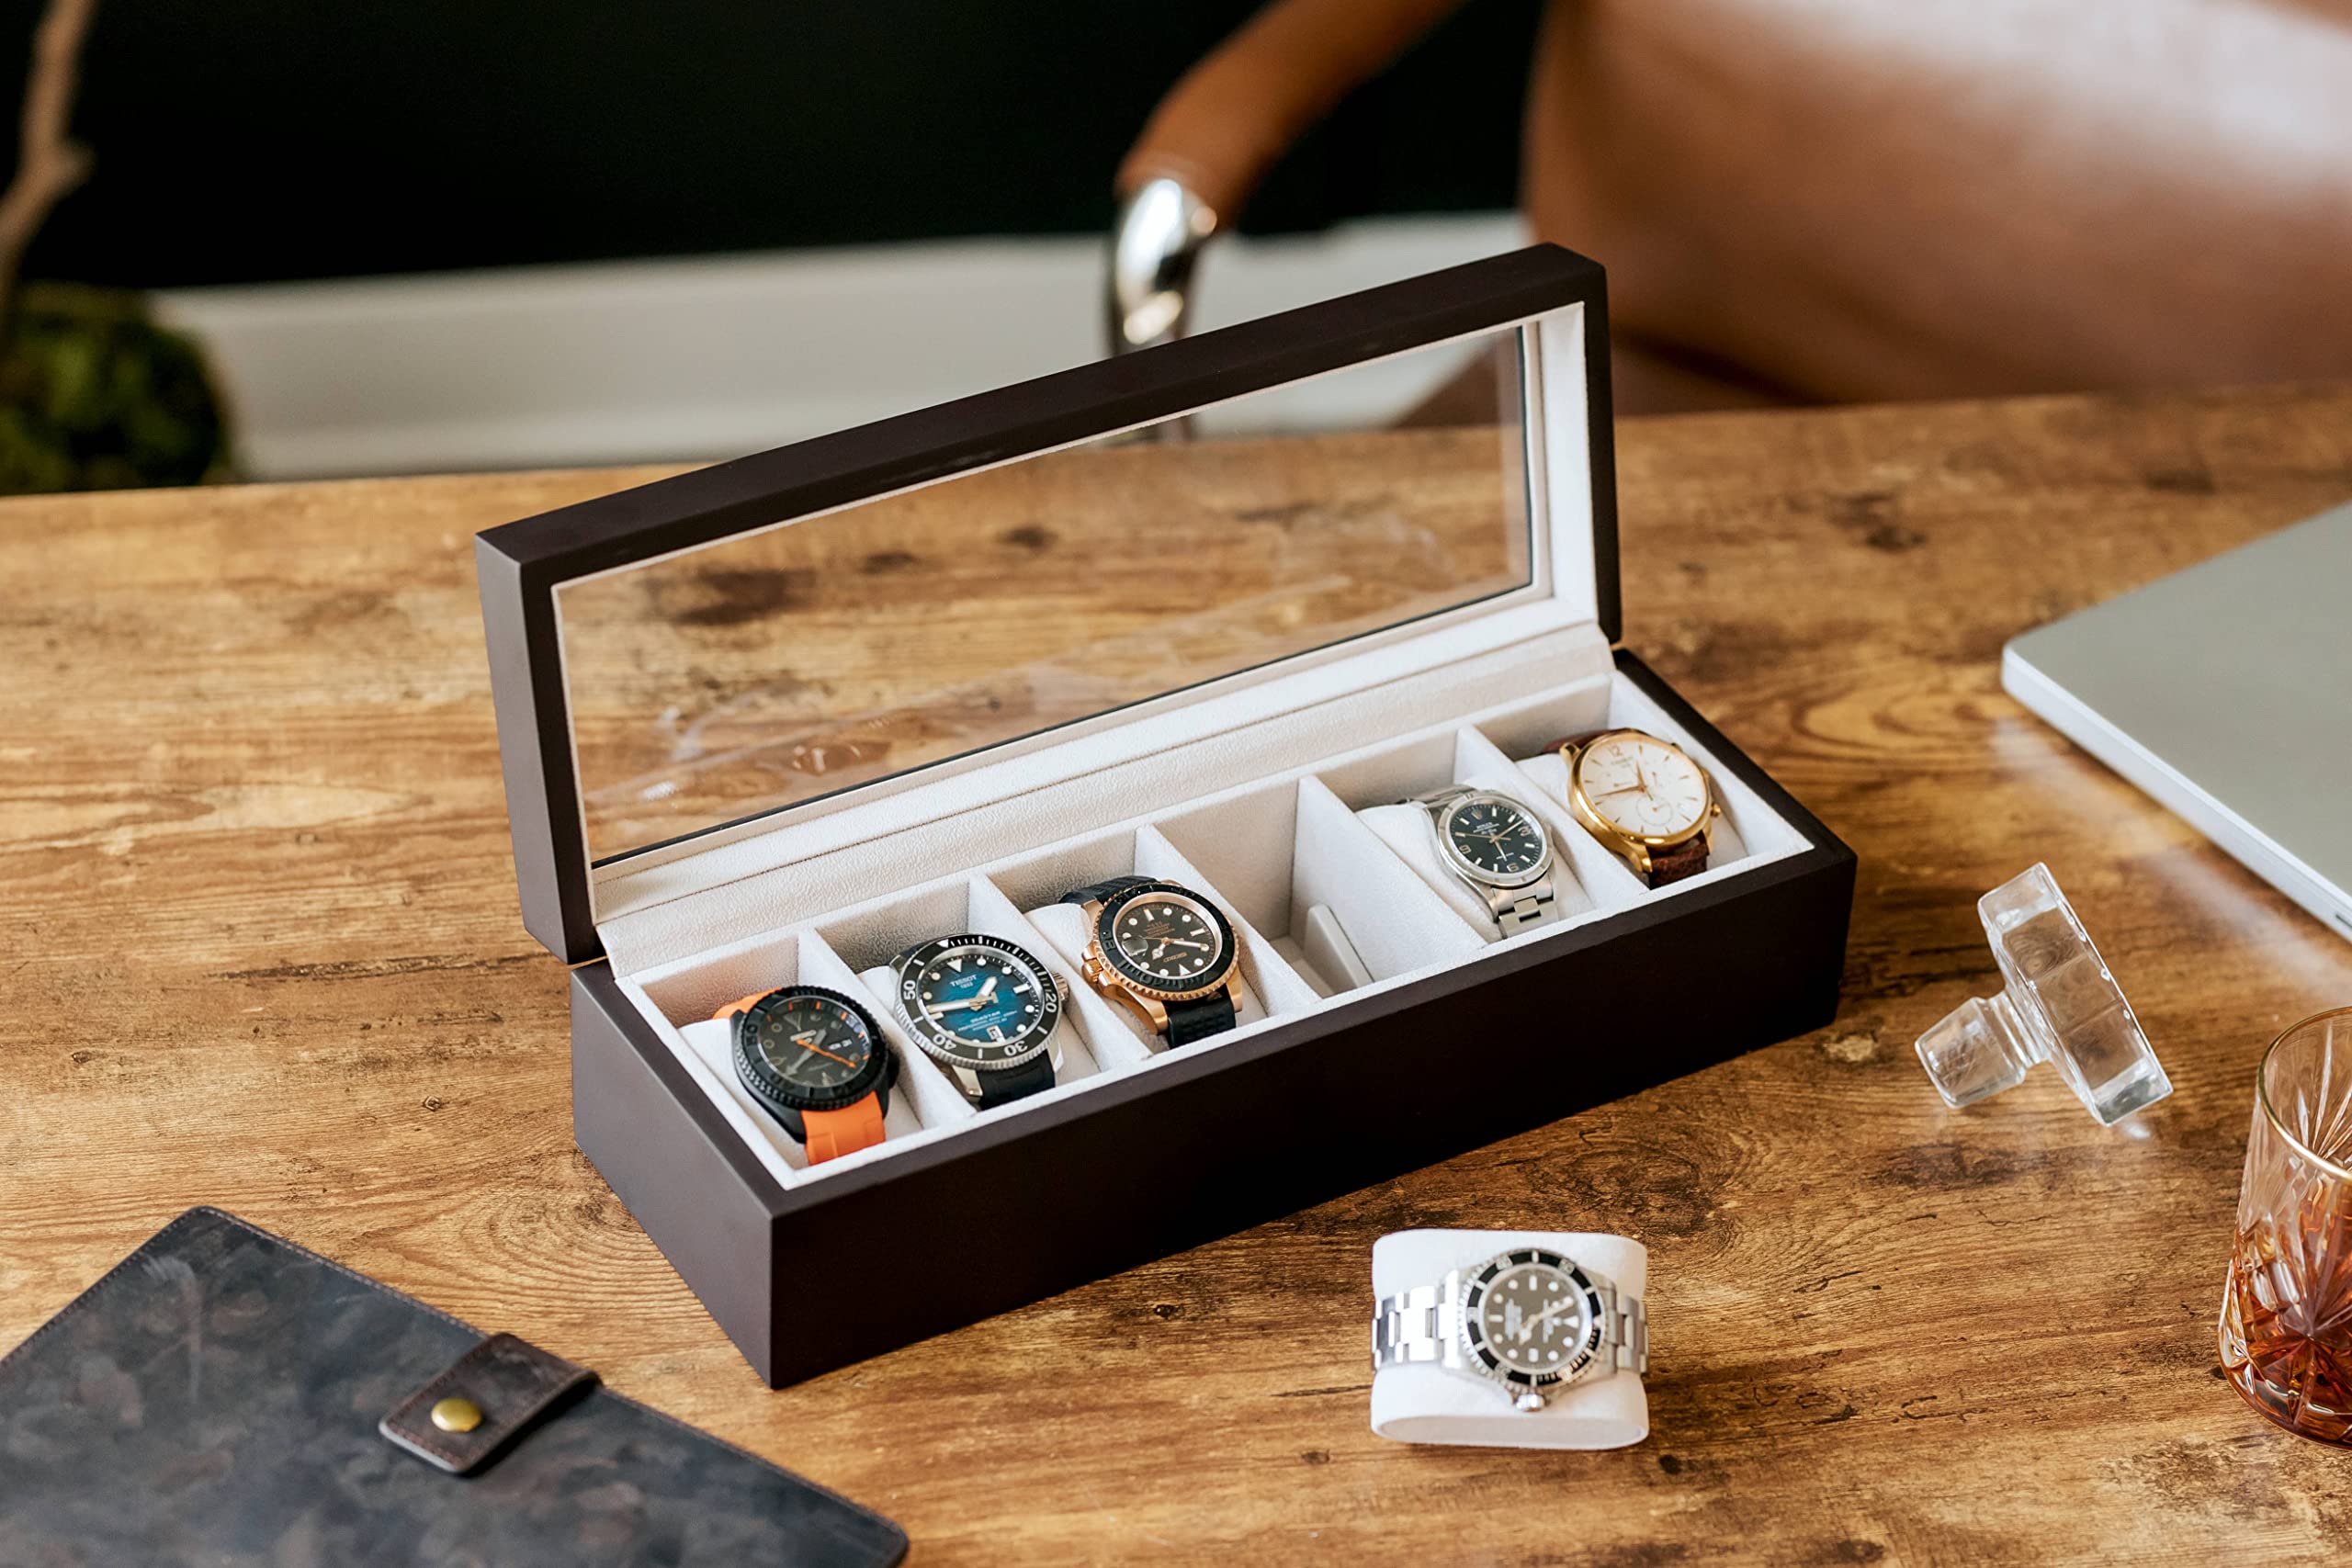 CASE ELEGANCE Solid Espresso Wood Watch Box Organizer with Glass Display Top